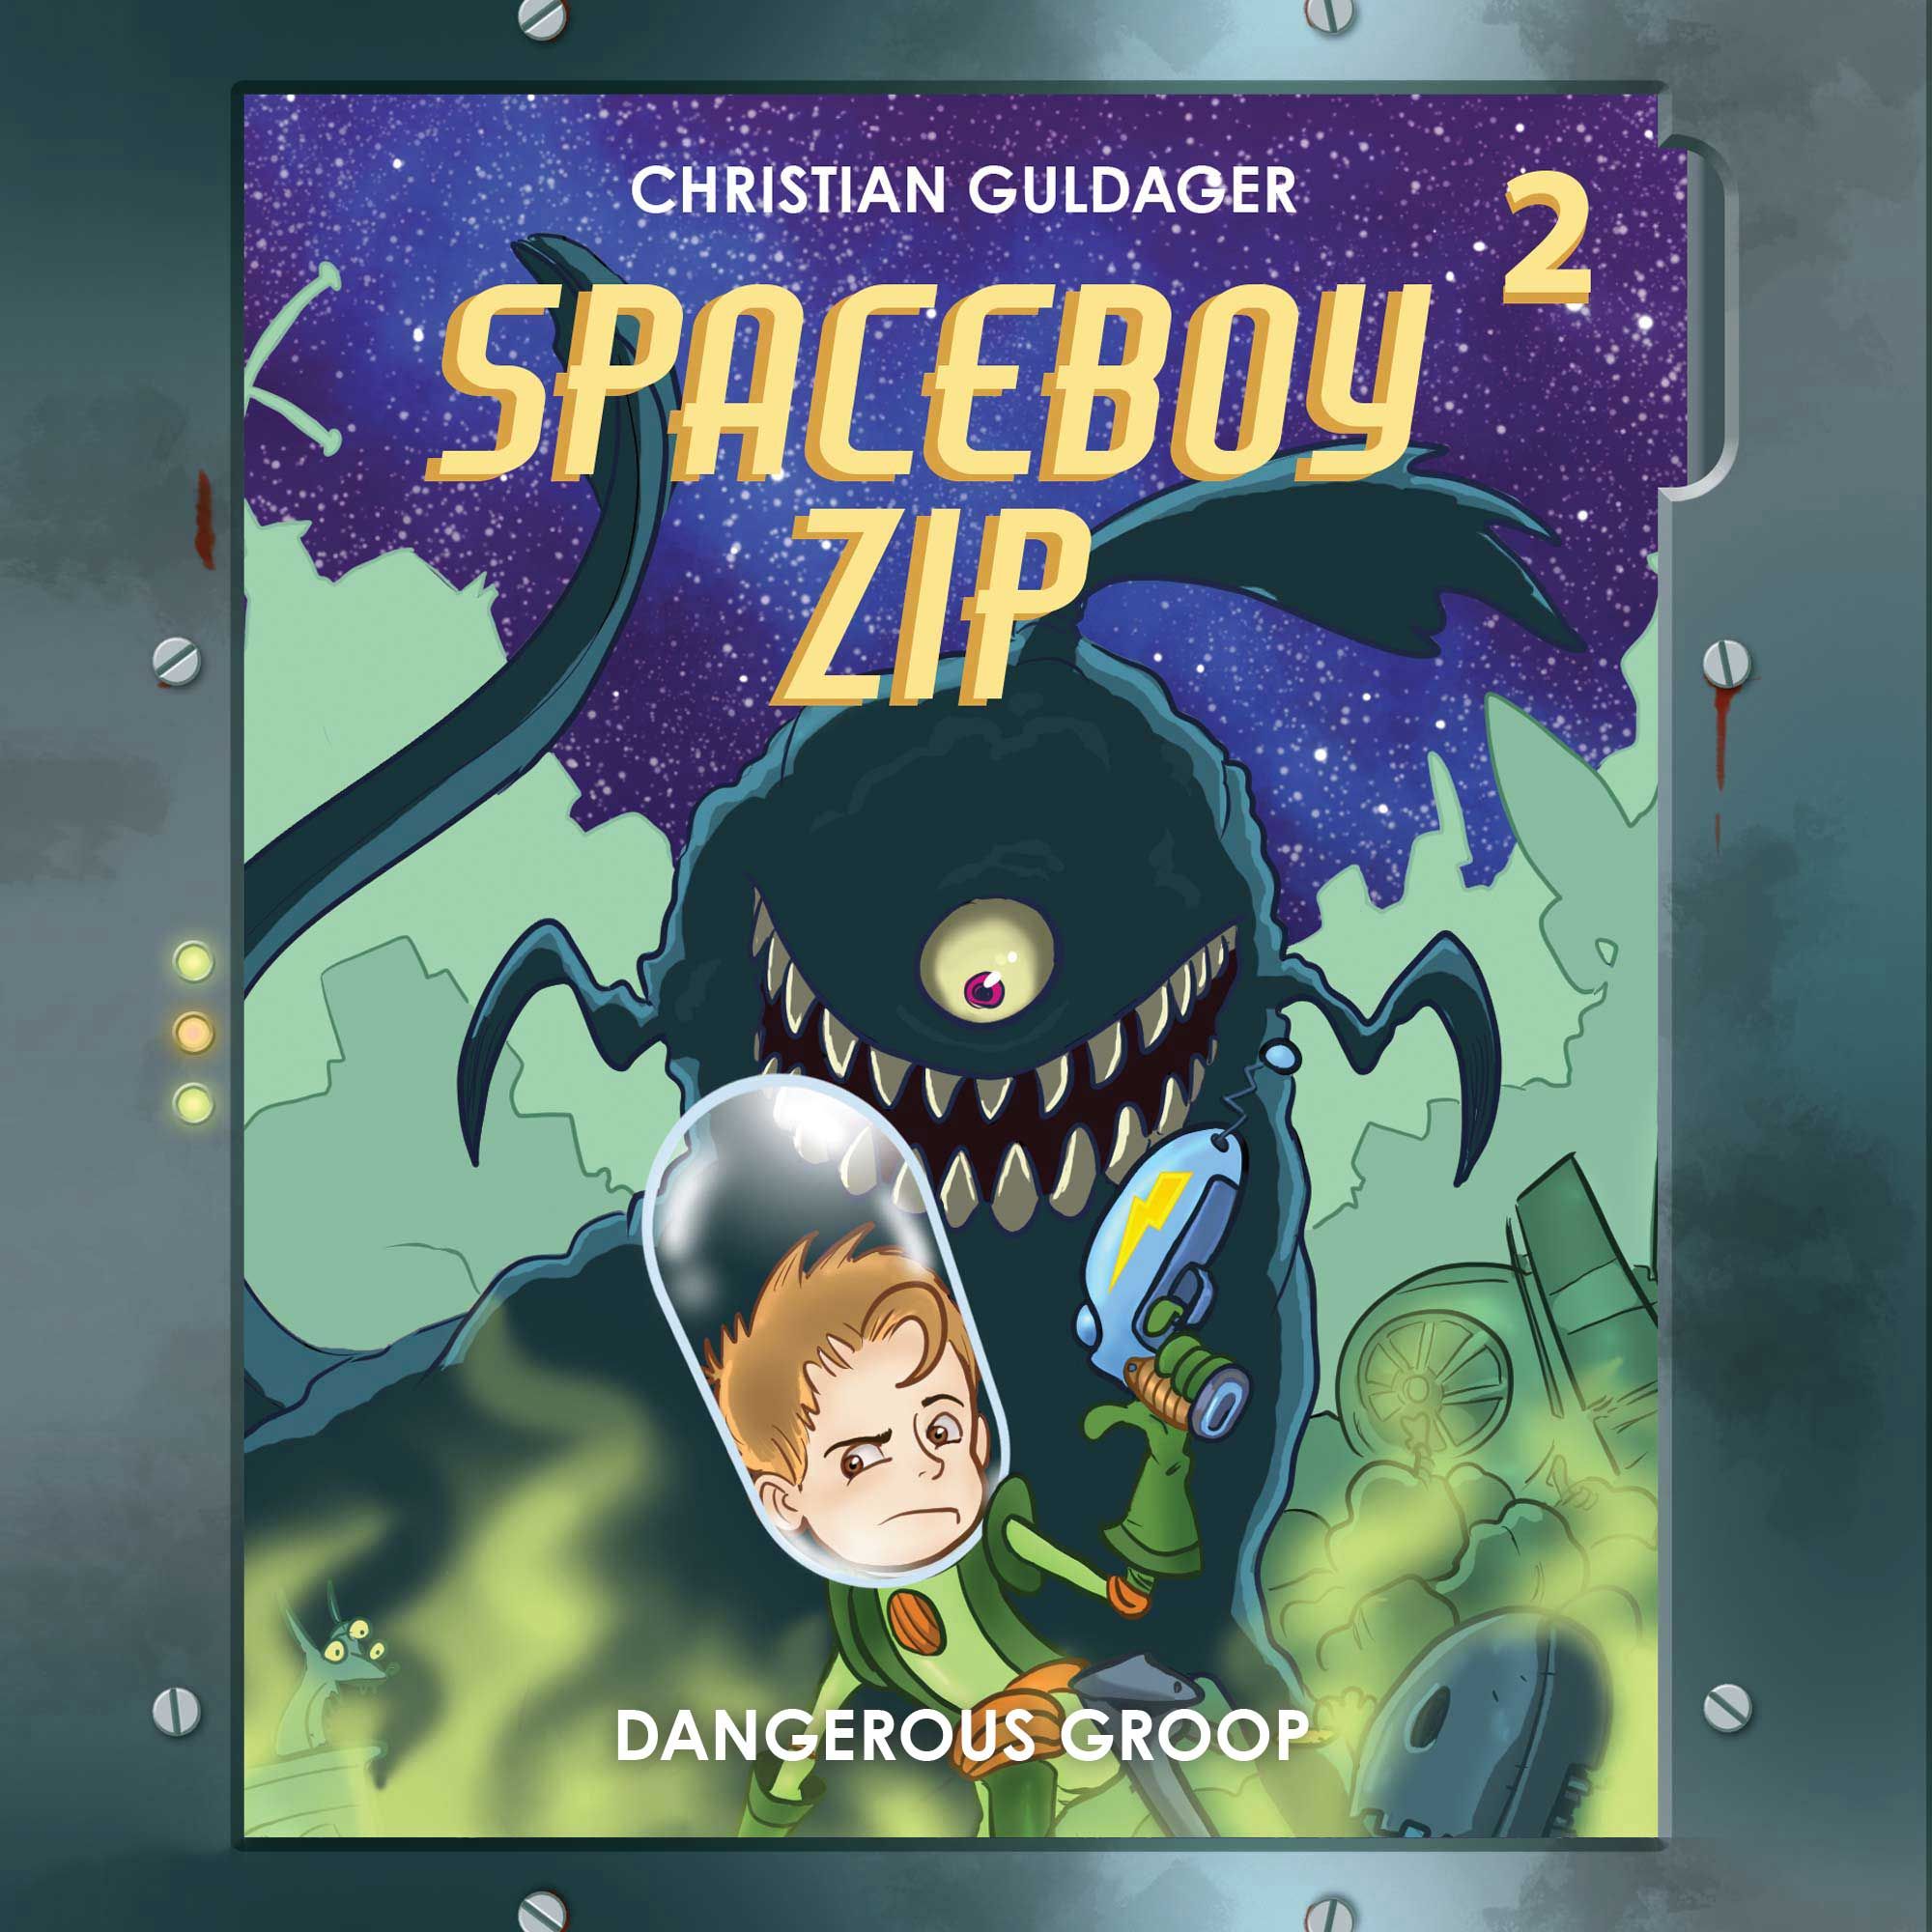 Spaceboy Zip #2: The Dangerous Groop, lydbog af Christian Guldager